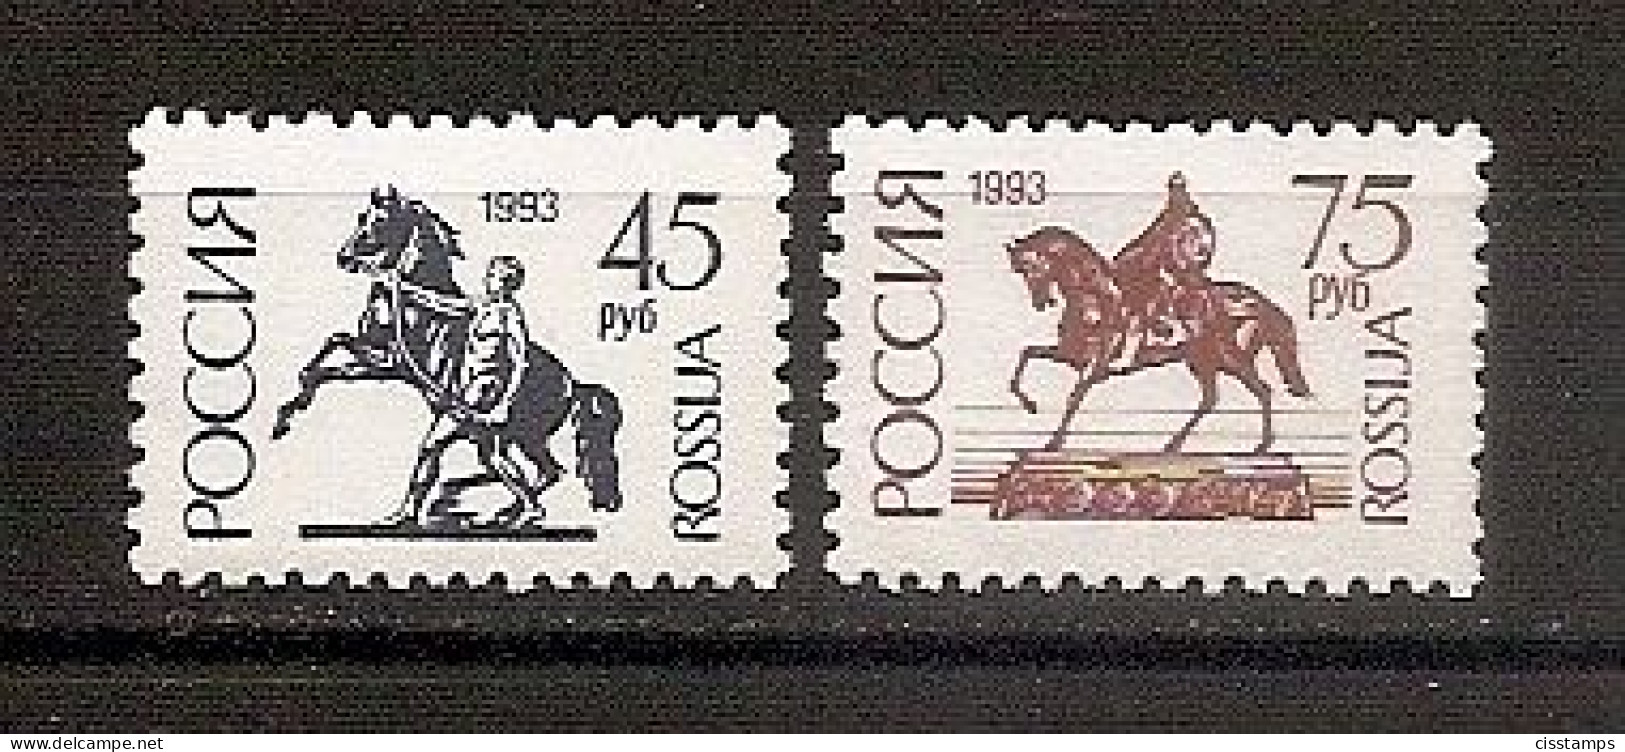 RUSSIA 1993●Definitives Ordinary Paper●11 1/2:11 3/4●●Freimarken Normalpapier●Mi 287w-88w MNH - Unused Stamps